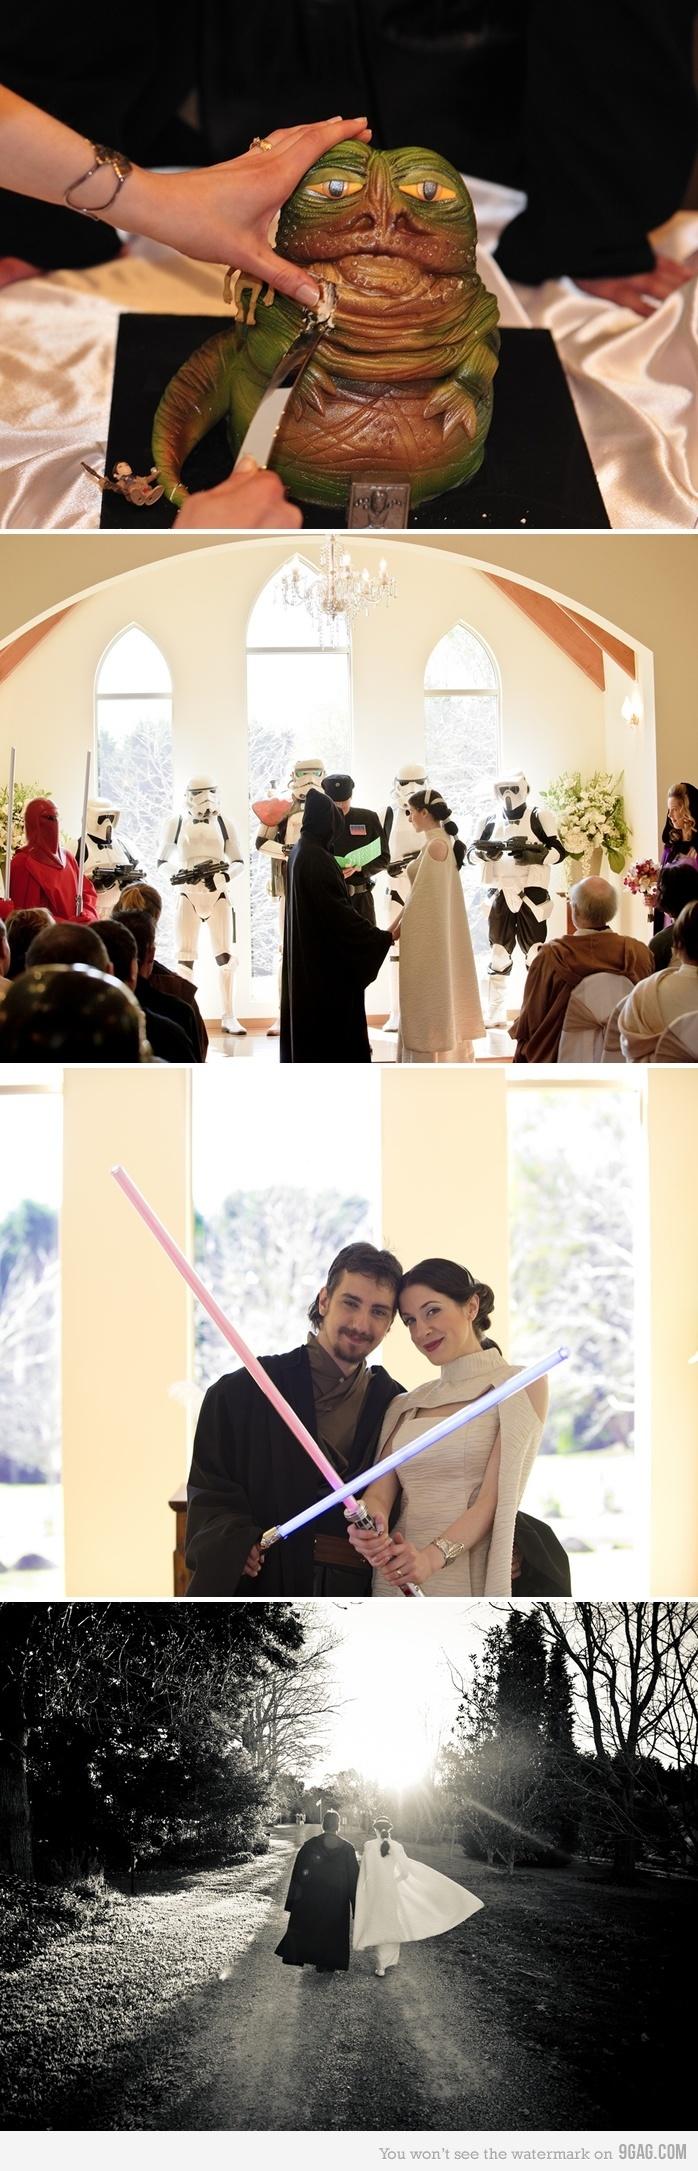 زفاف - Starwars wedding ceremony